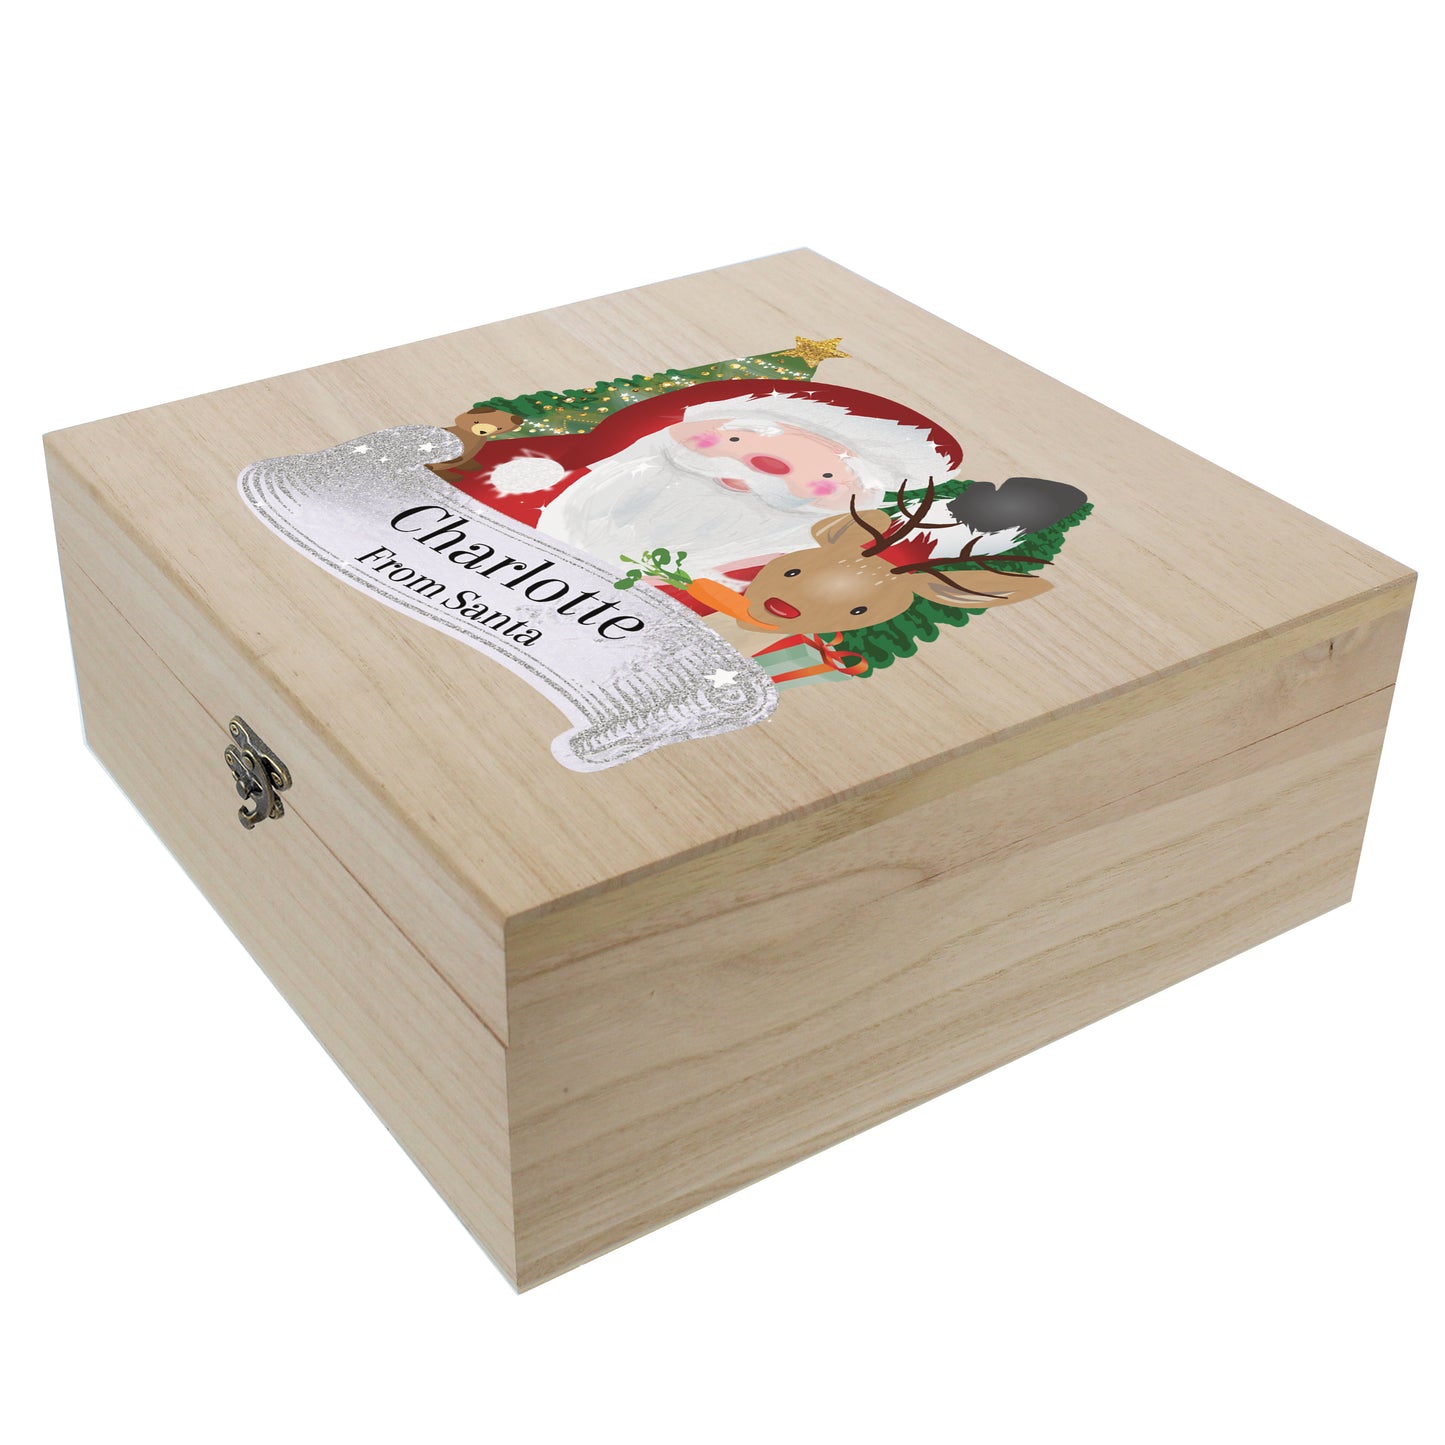 Santa Christmas Eve Box - Lilybet loves